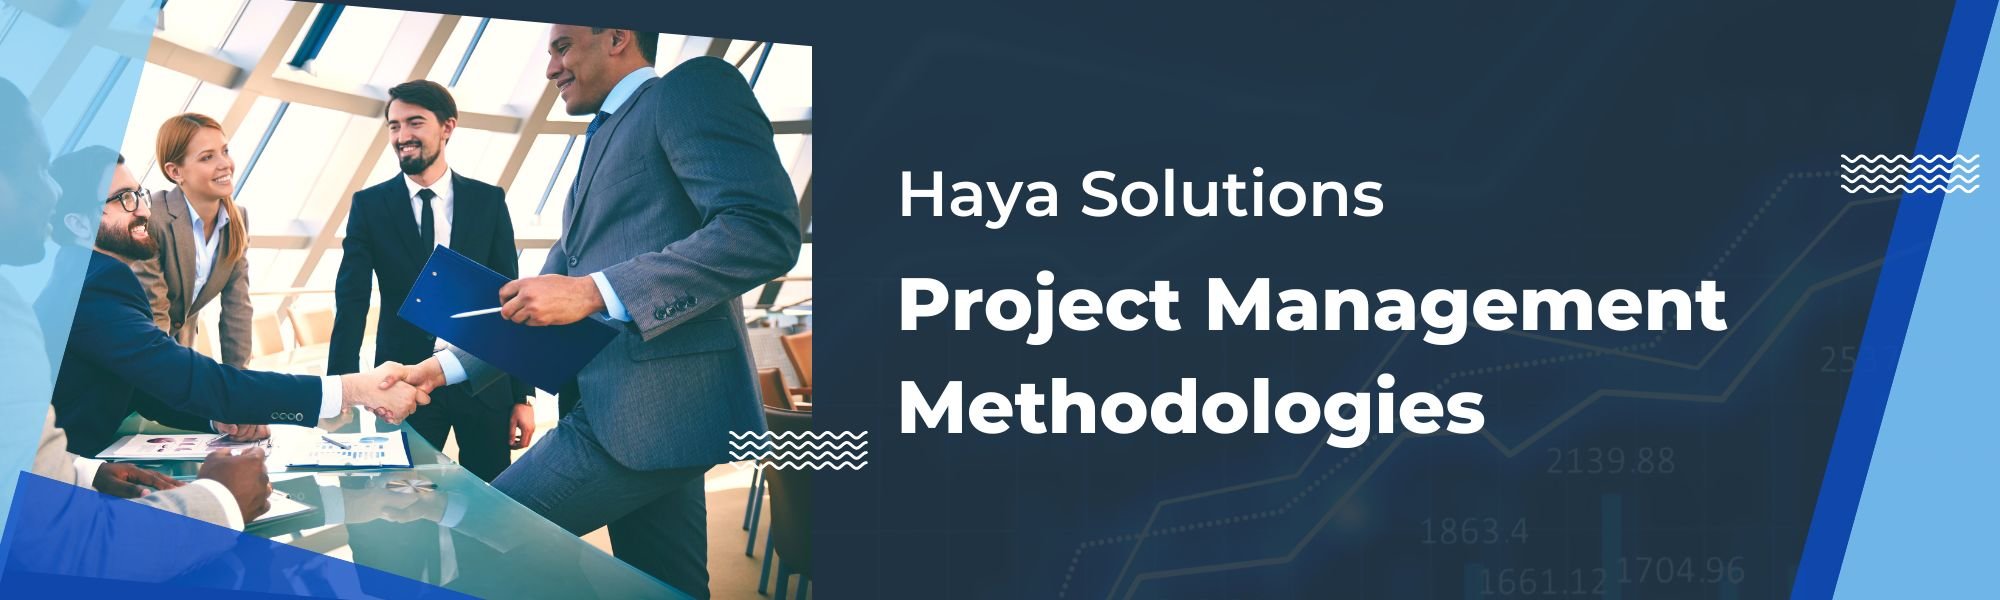 Haya Solutions's Project Management Methodologies